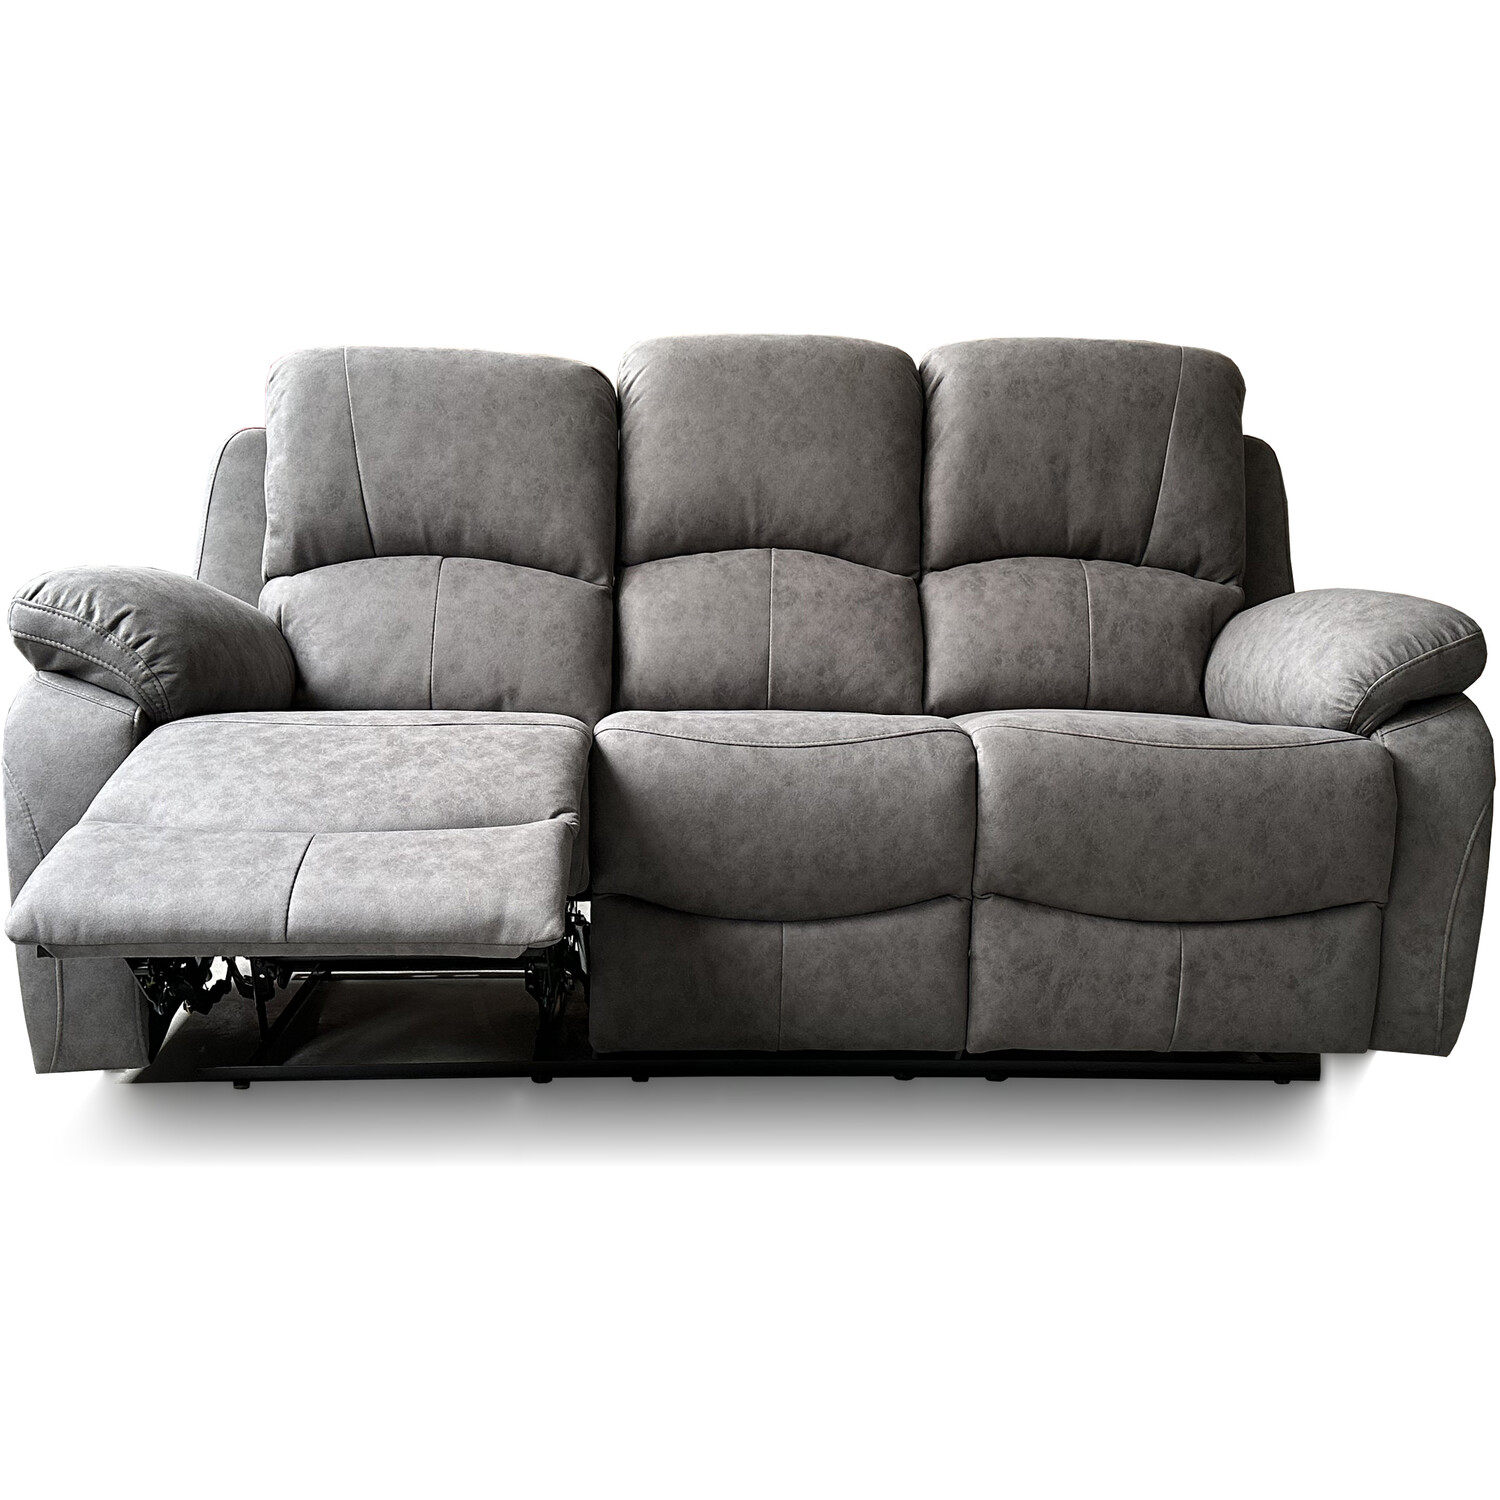 Milano 3 Seater Grey Fabric Recliner Sofa Image 4